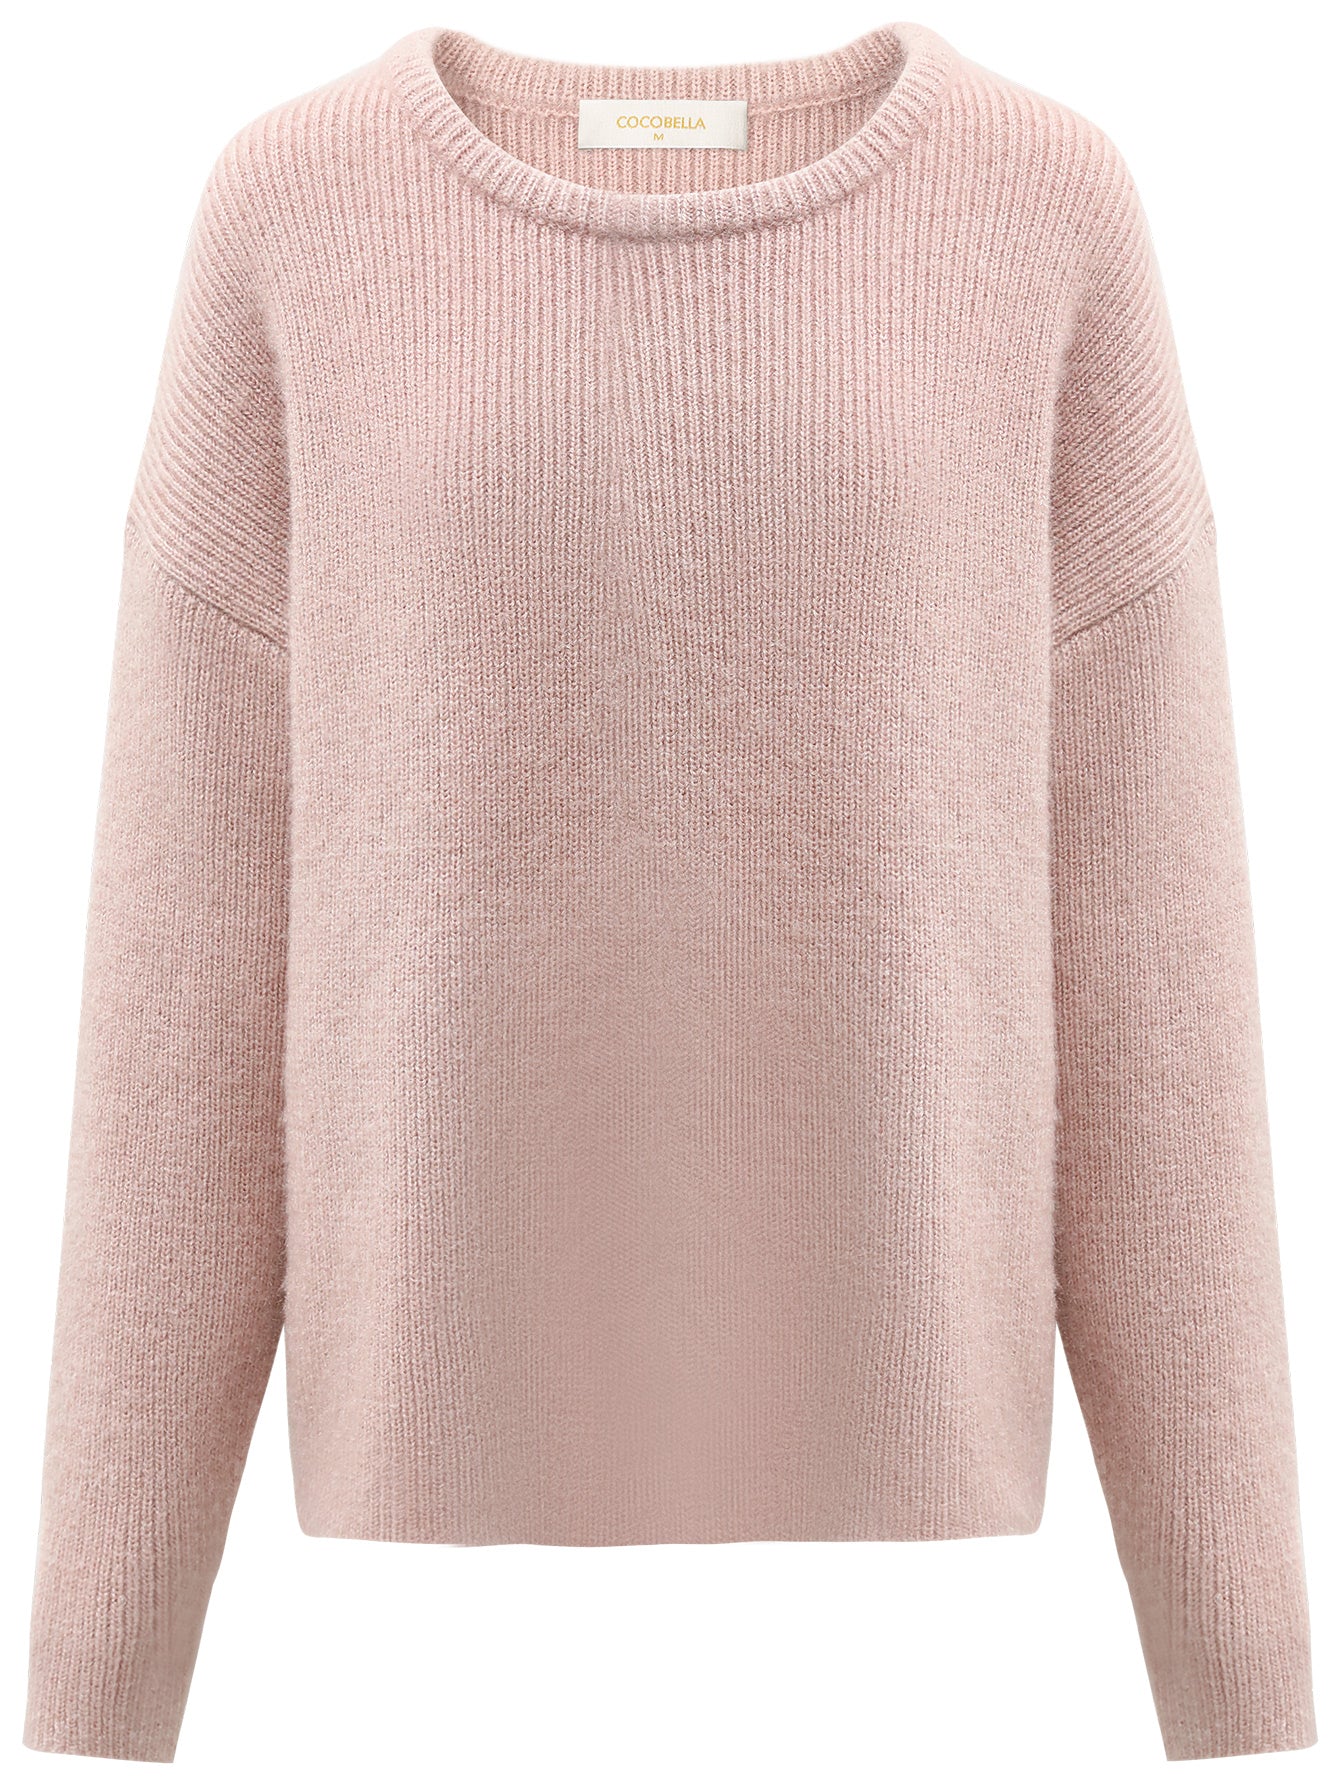 pink-velvet-knit-top_all_pink_4.jpg